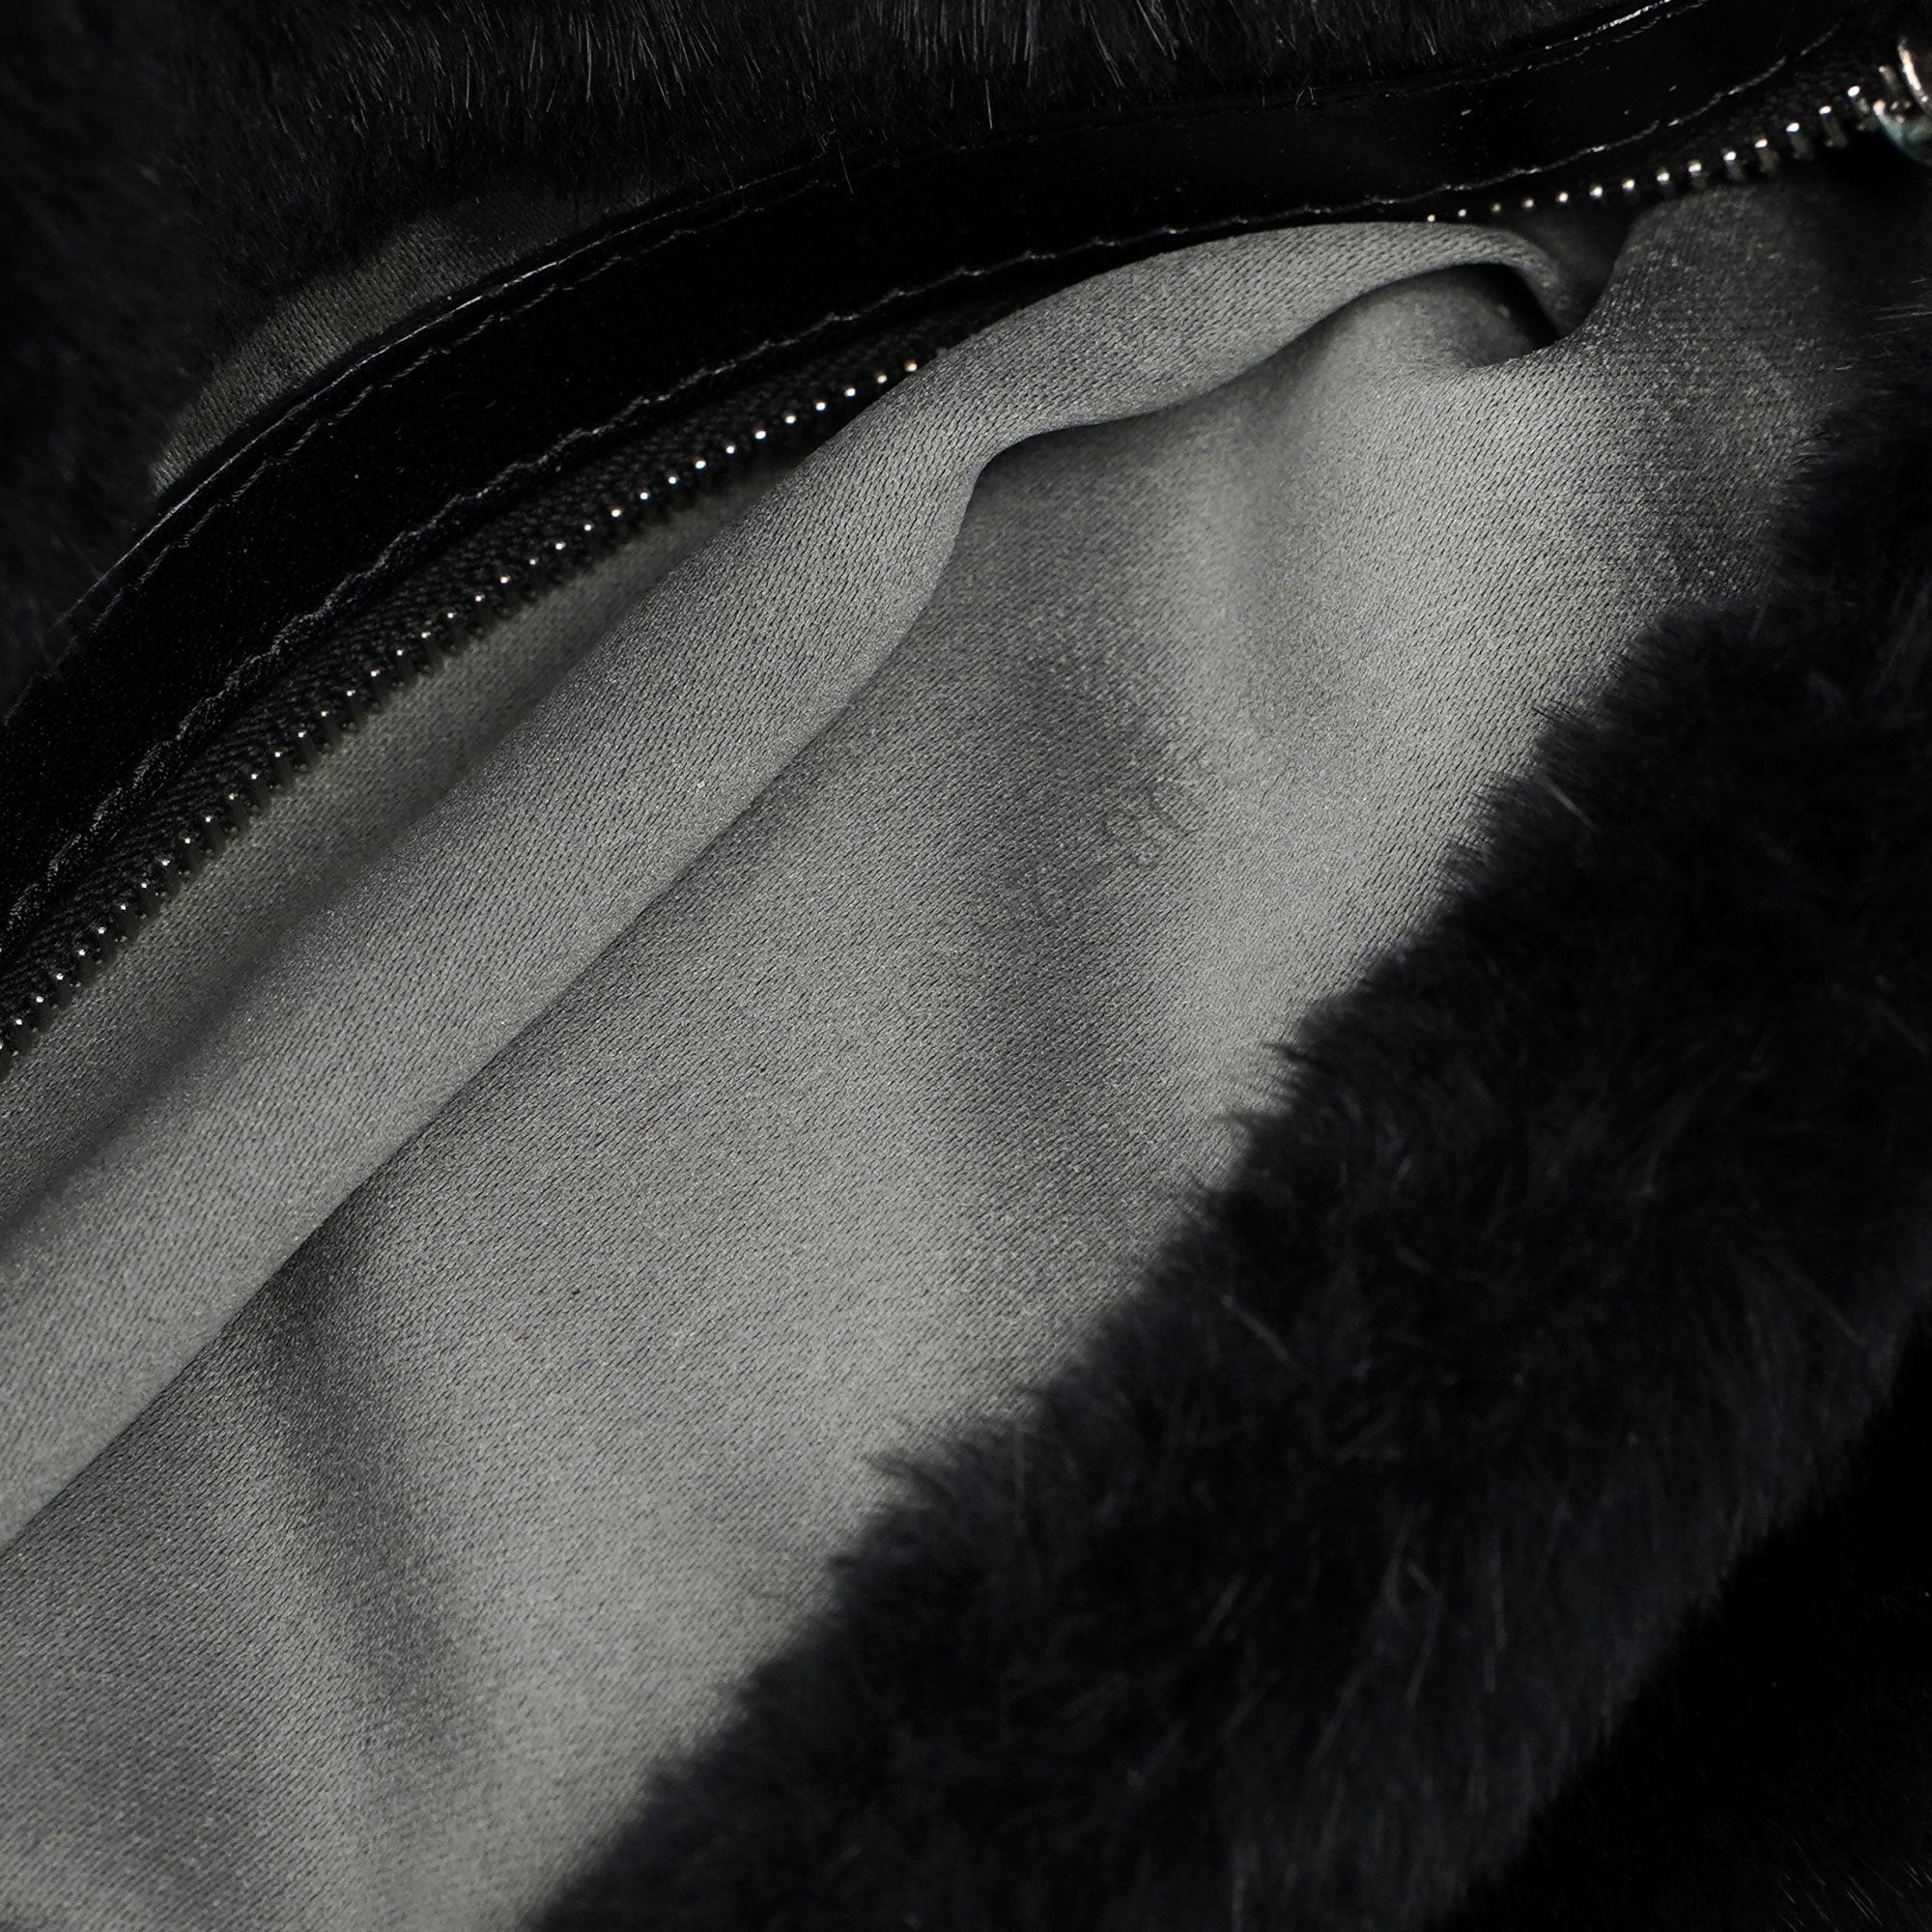 Fendi Black Fur Mamma Bag